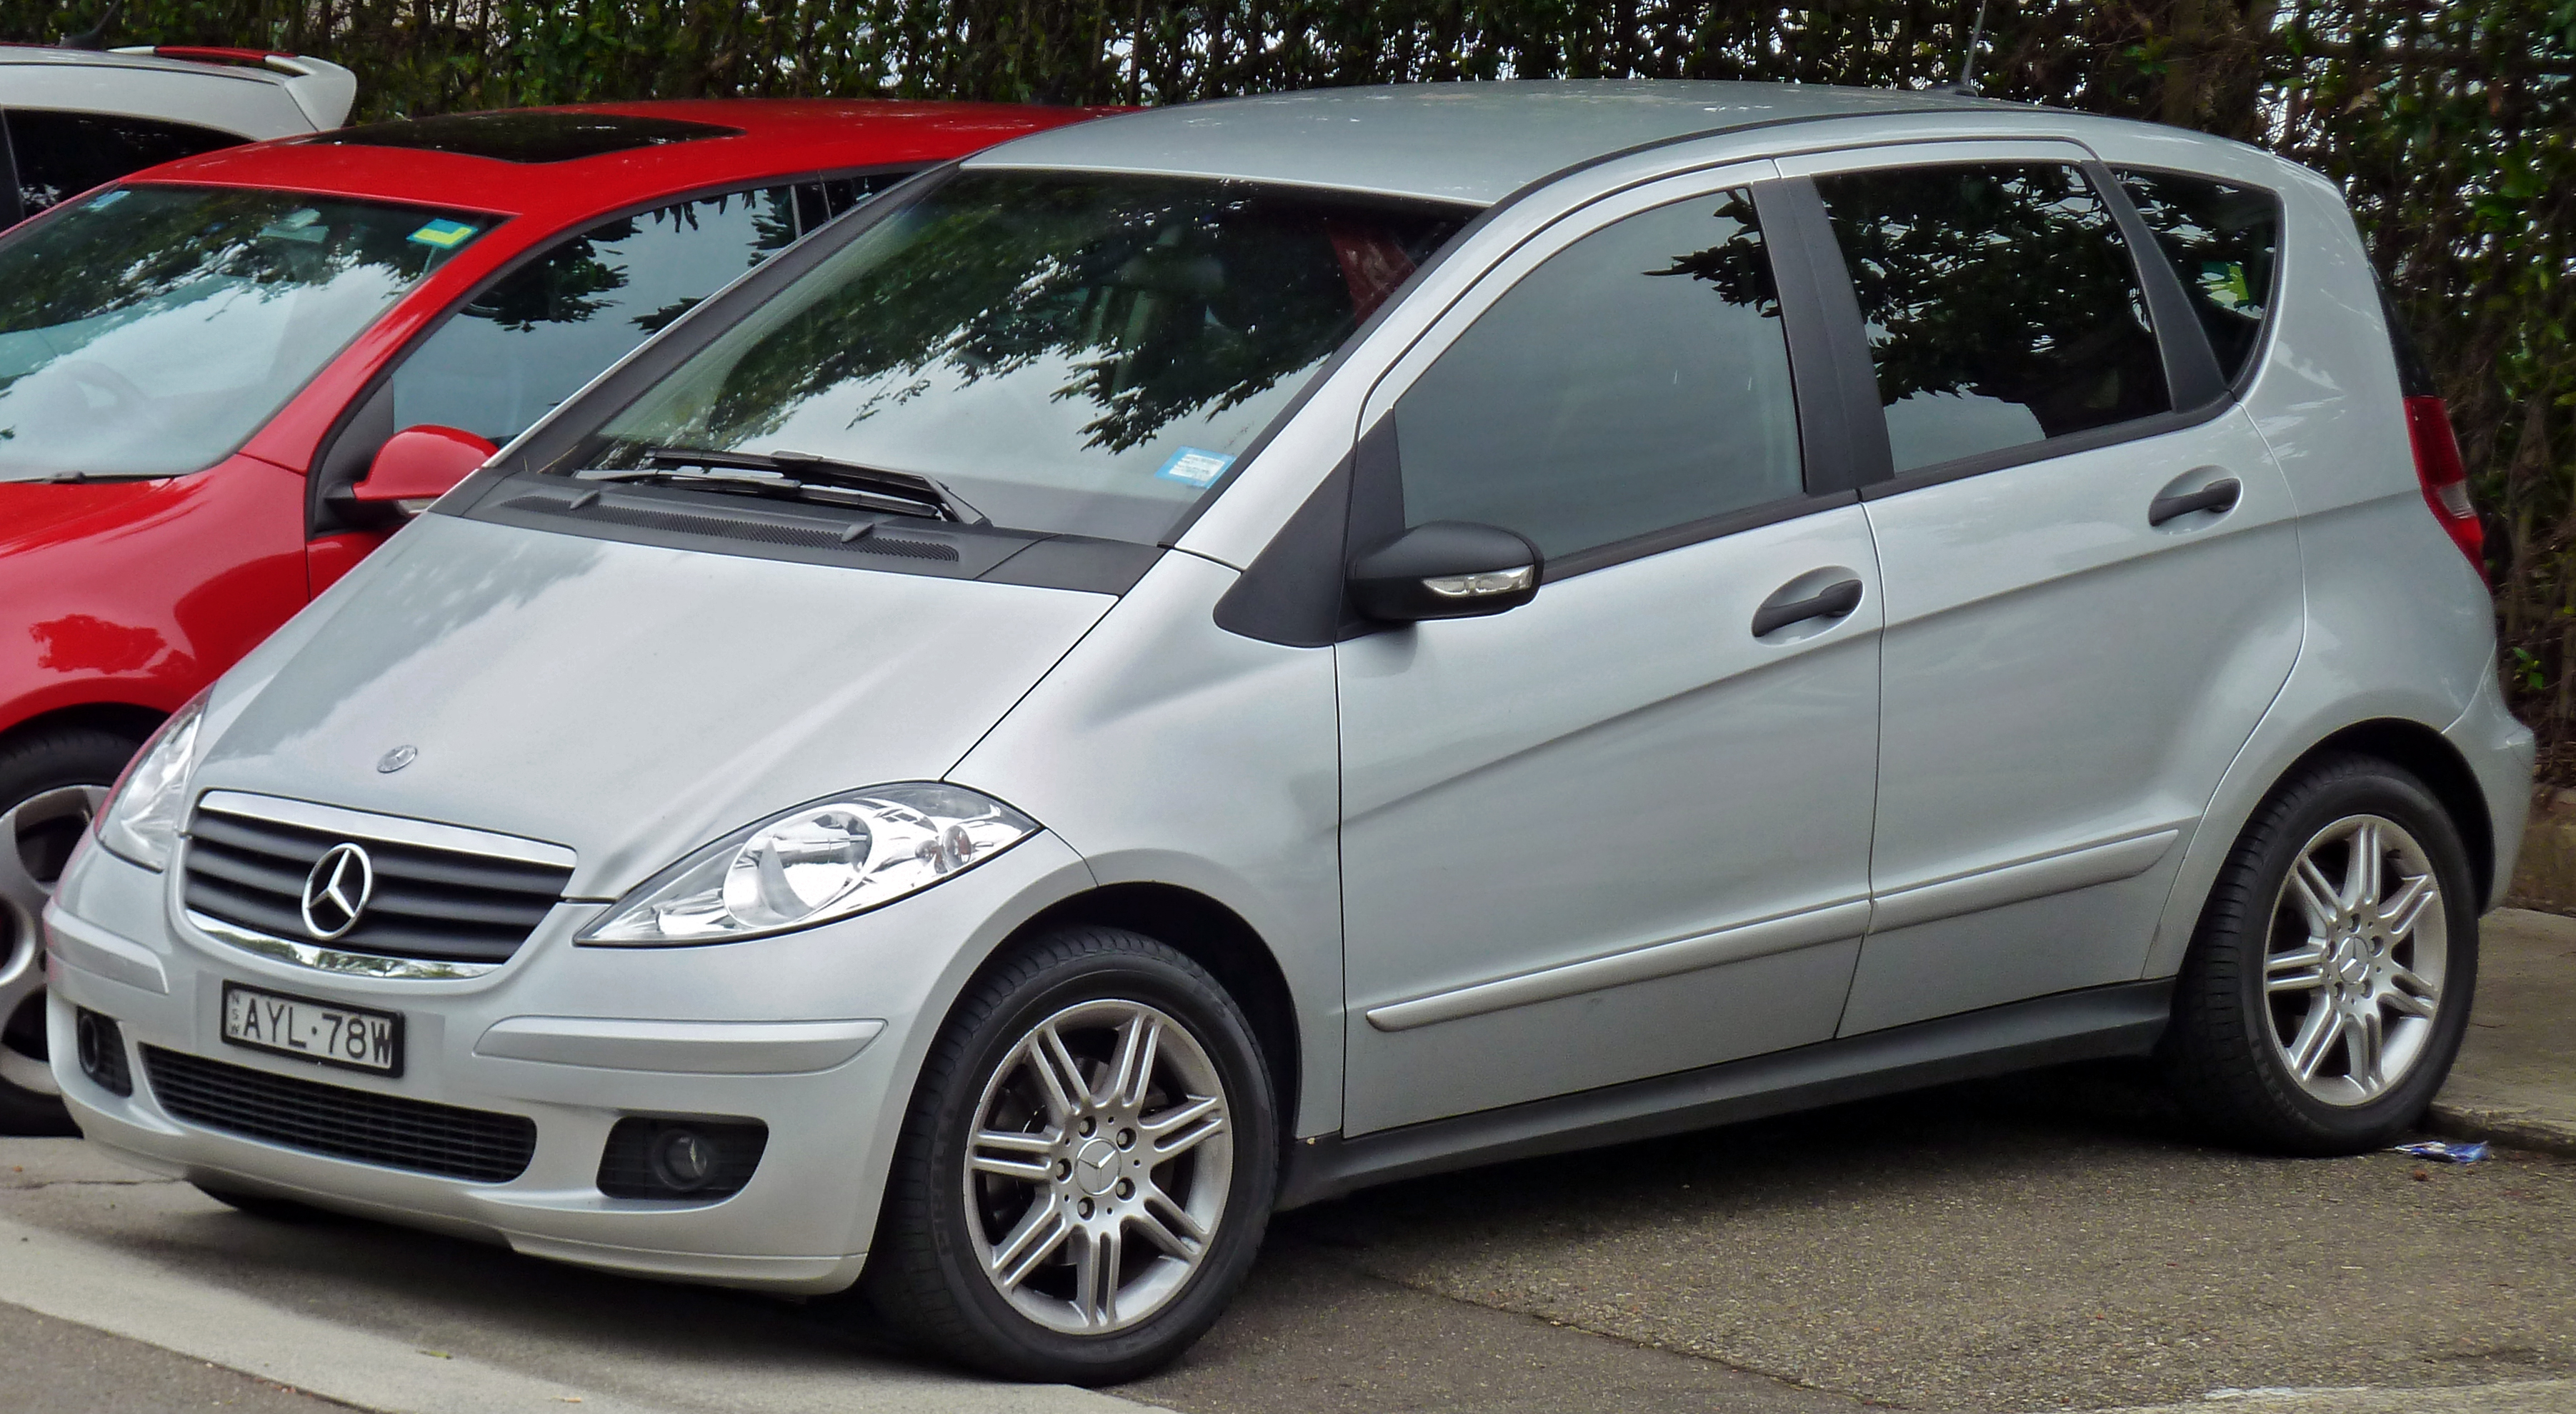 http://carsot.com/images/mercedesbenz-aklasse-ii-w169-restyling-2008-2012-hatchback-5-door-exterior-1.jpg